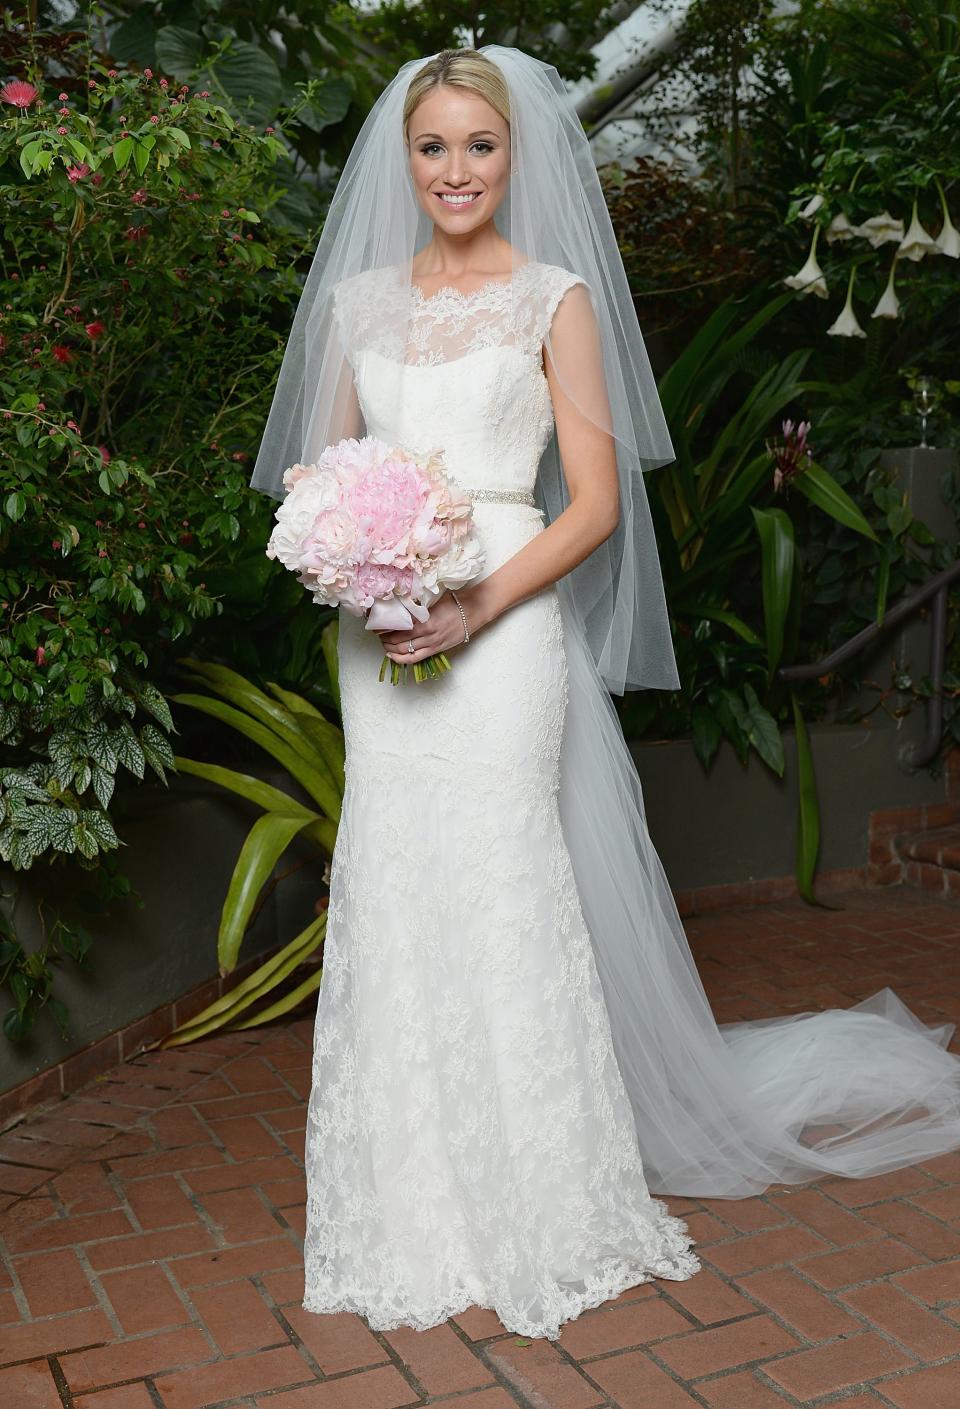 Katrina Bowden in her wedding dress on her wedding day.